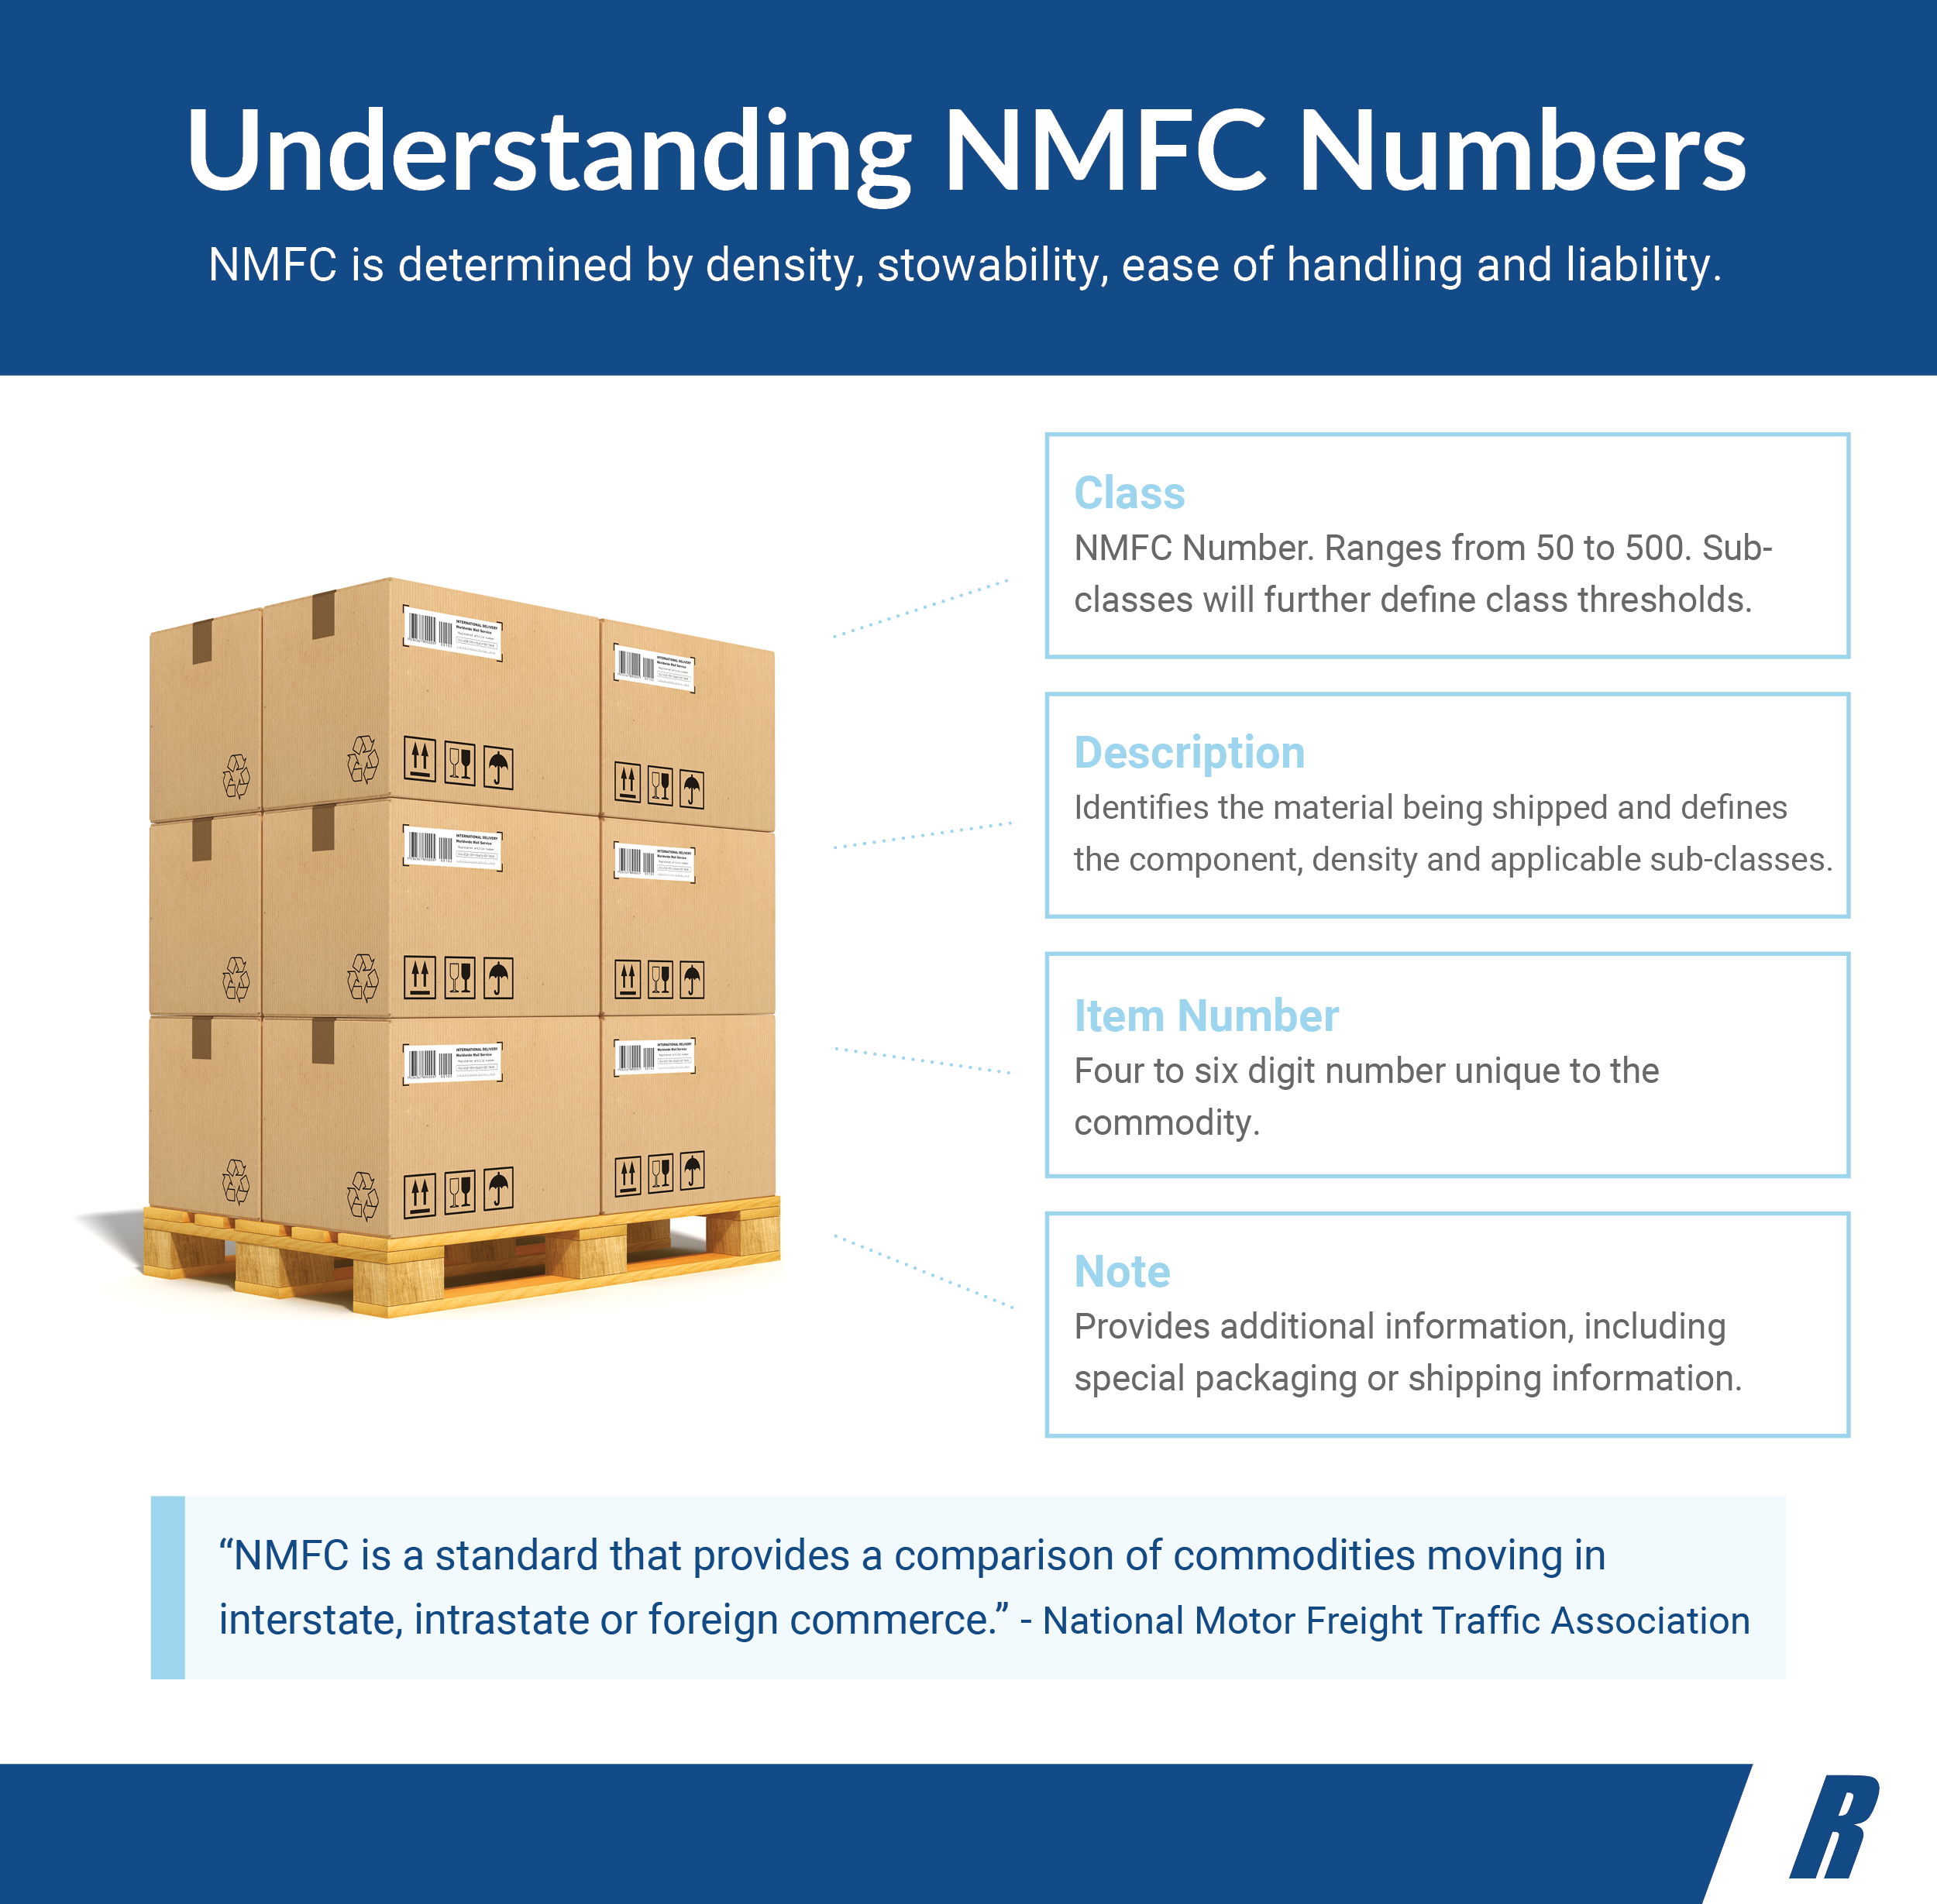 Understanding_NMFC_Numbers_Full_Infographic_7.10.20_v3